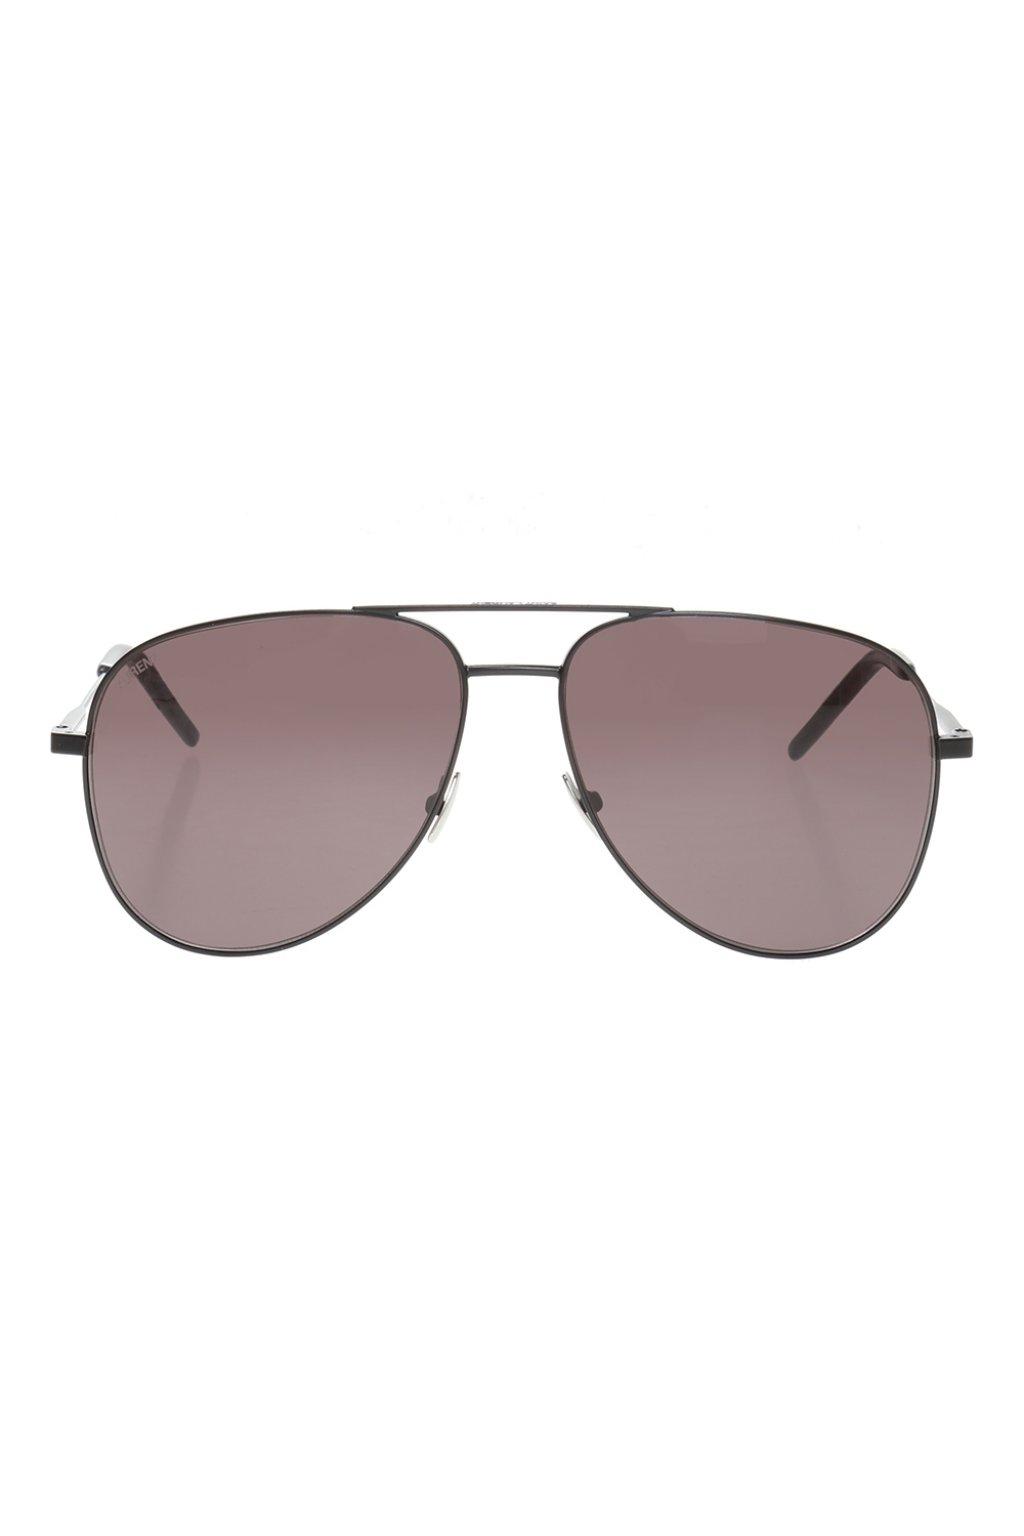 Saint Laurent 'classic 11' Sunglasses Silver in Metallic for Men - Lyst